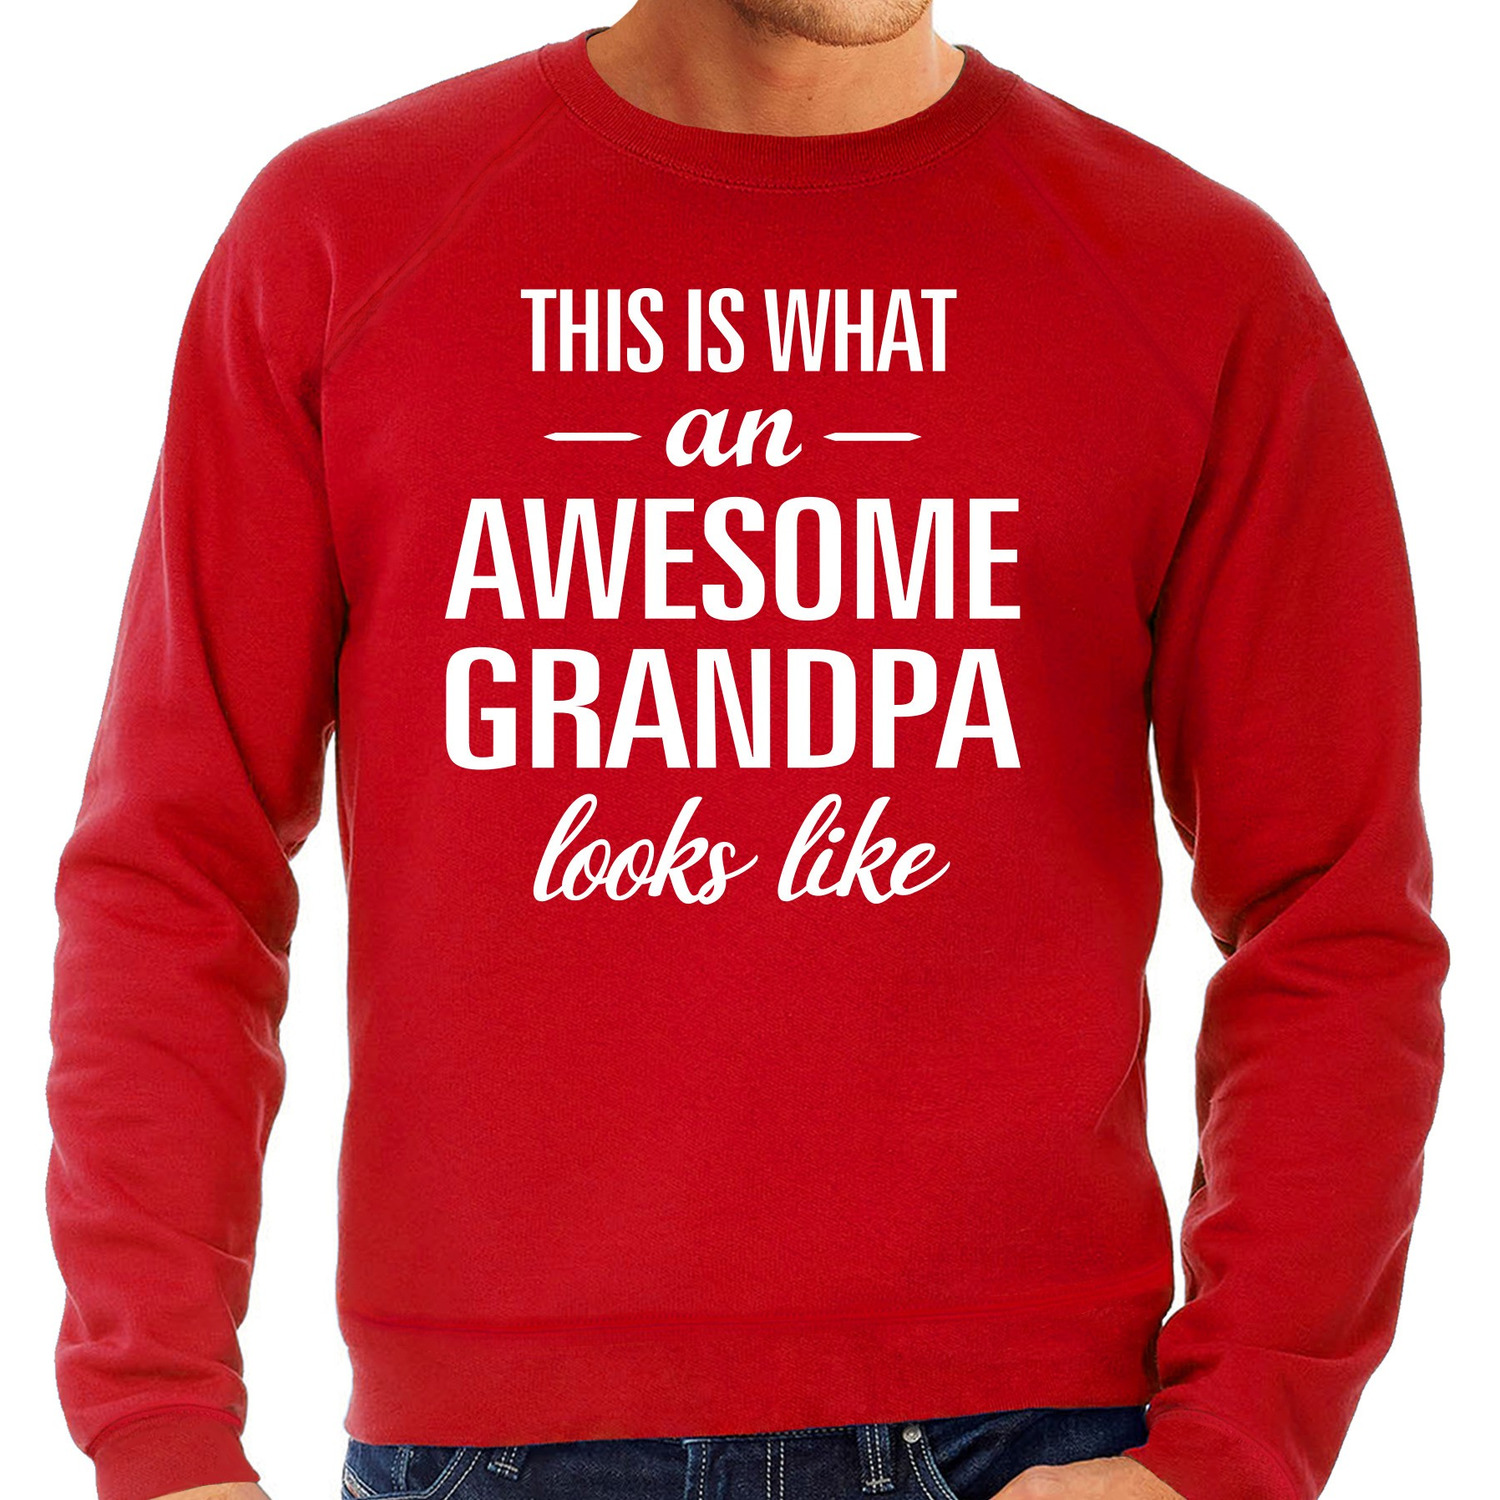 Awesome grandpa / opa cadeau sweater rood heren